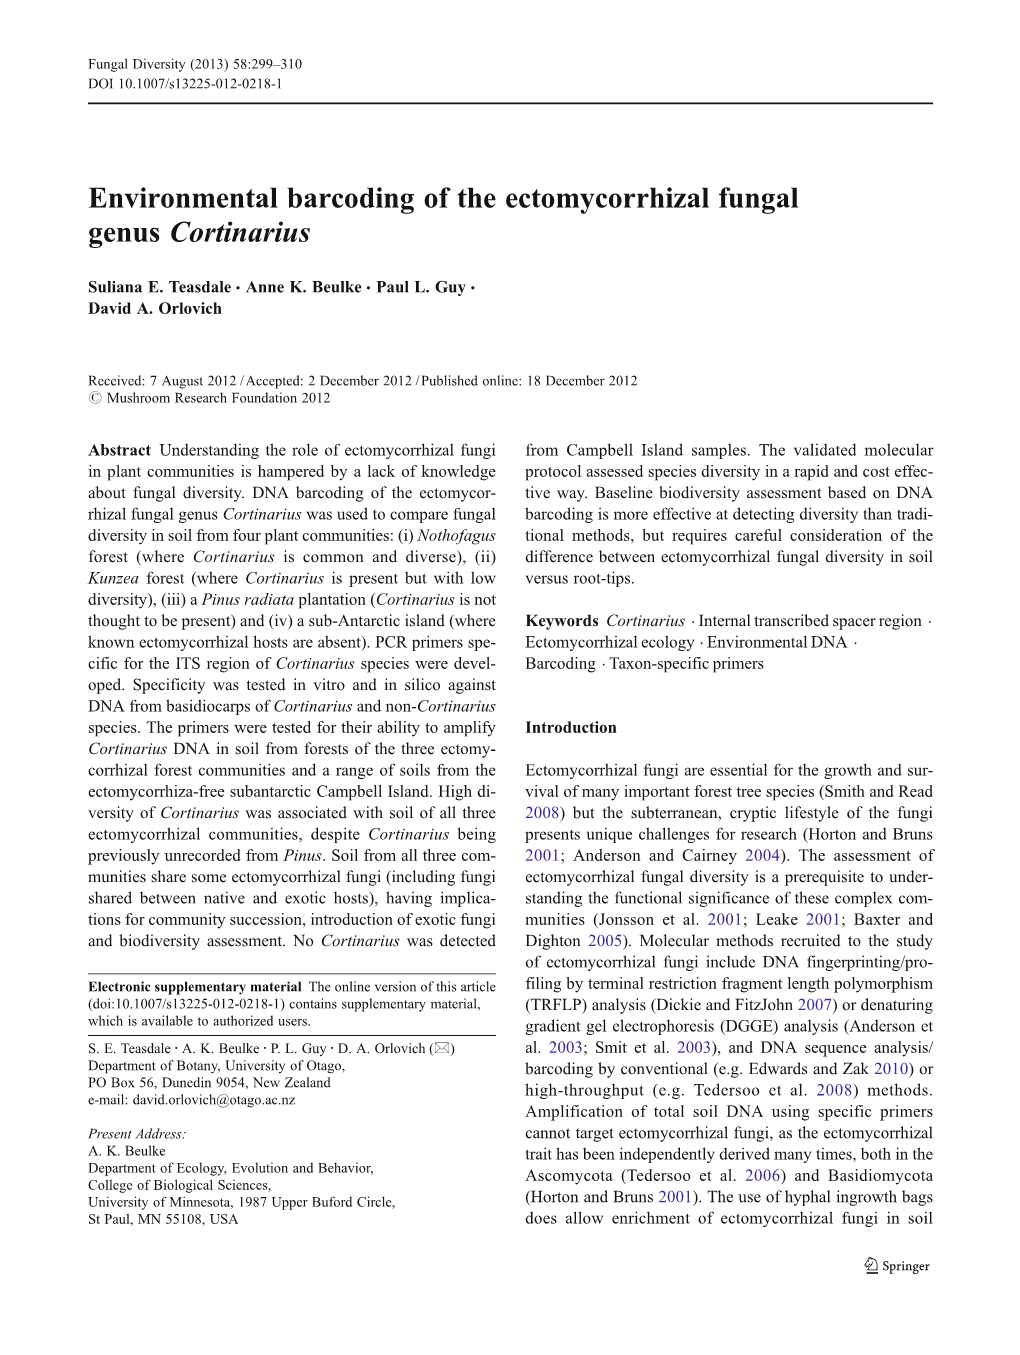 Environmental Barcoding of the Ectomycorrhizal Fungal Genus Cortinarius